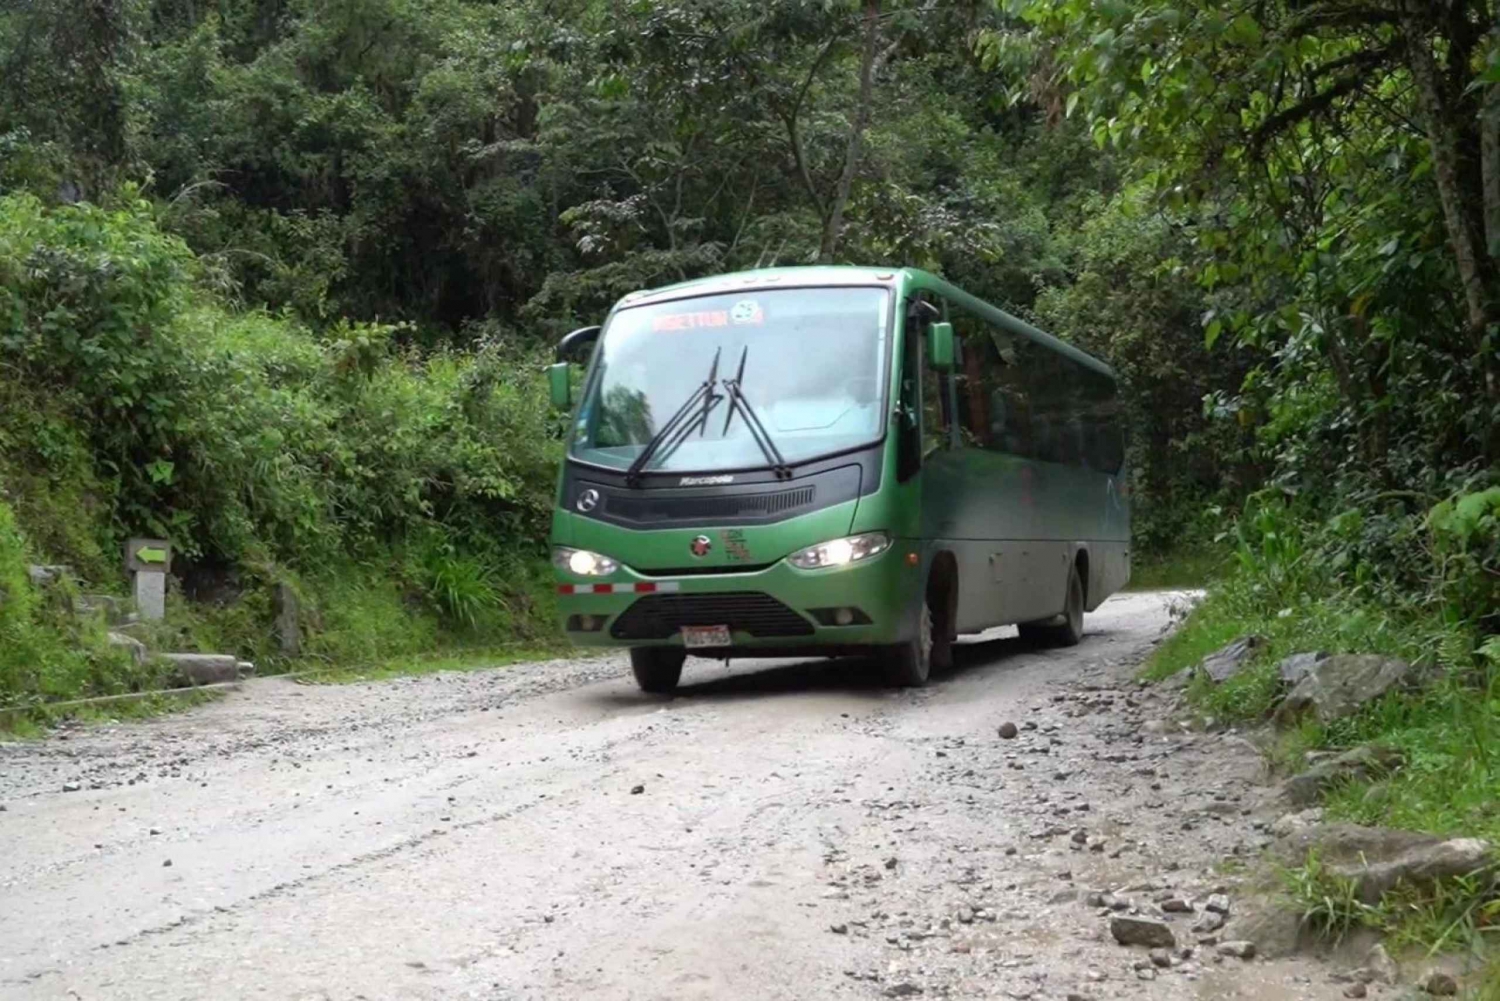 Fra Aguas Calientes: Bussbillett tur-retur til Machu Picchu